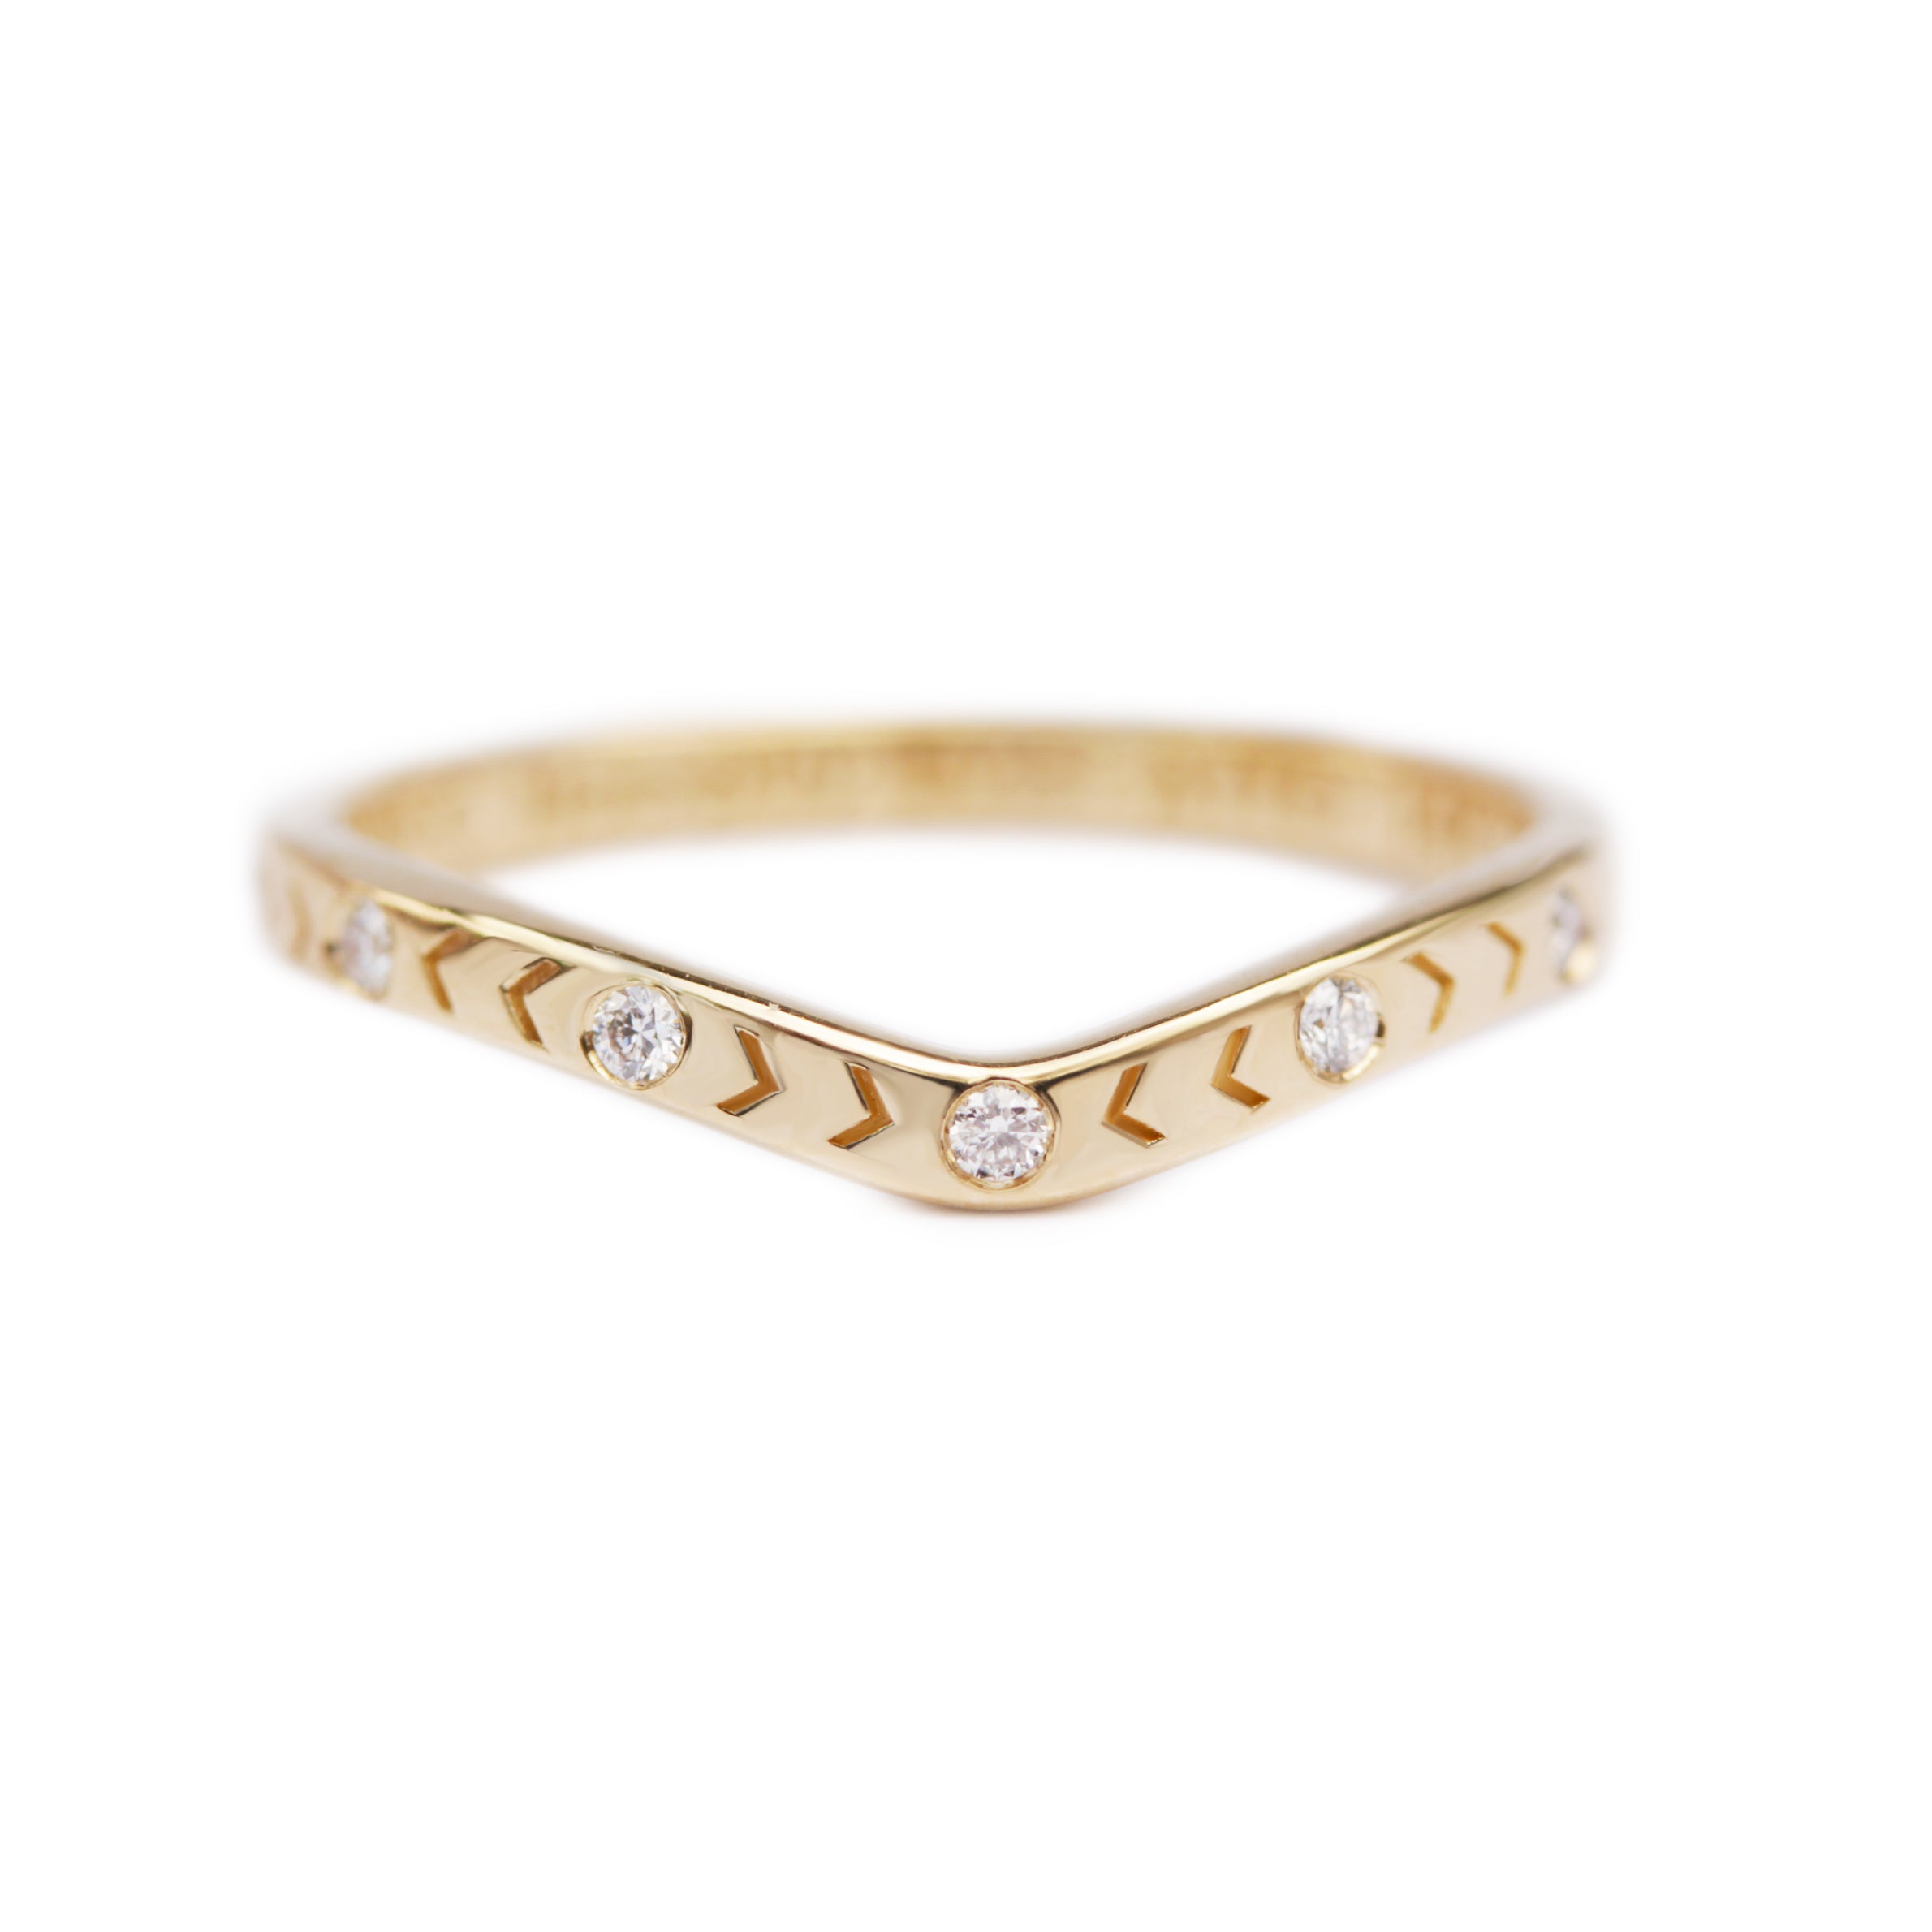 Curve Arrows Gold Diamond Wedding Ring - 14K Yellow Gold, Size 7, READY TO SHIP! ♥